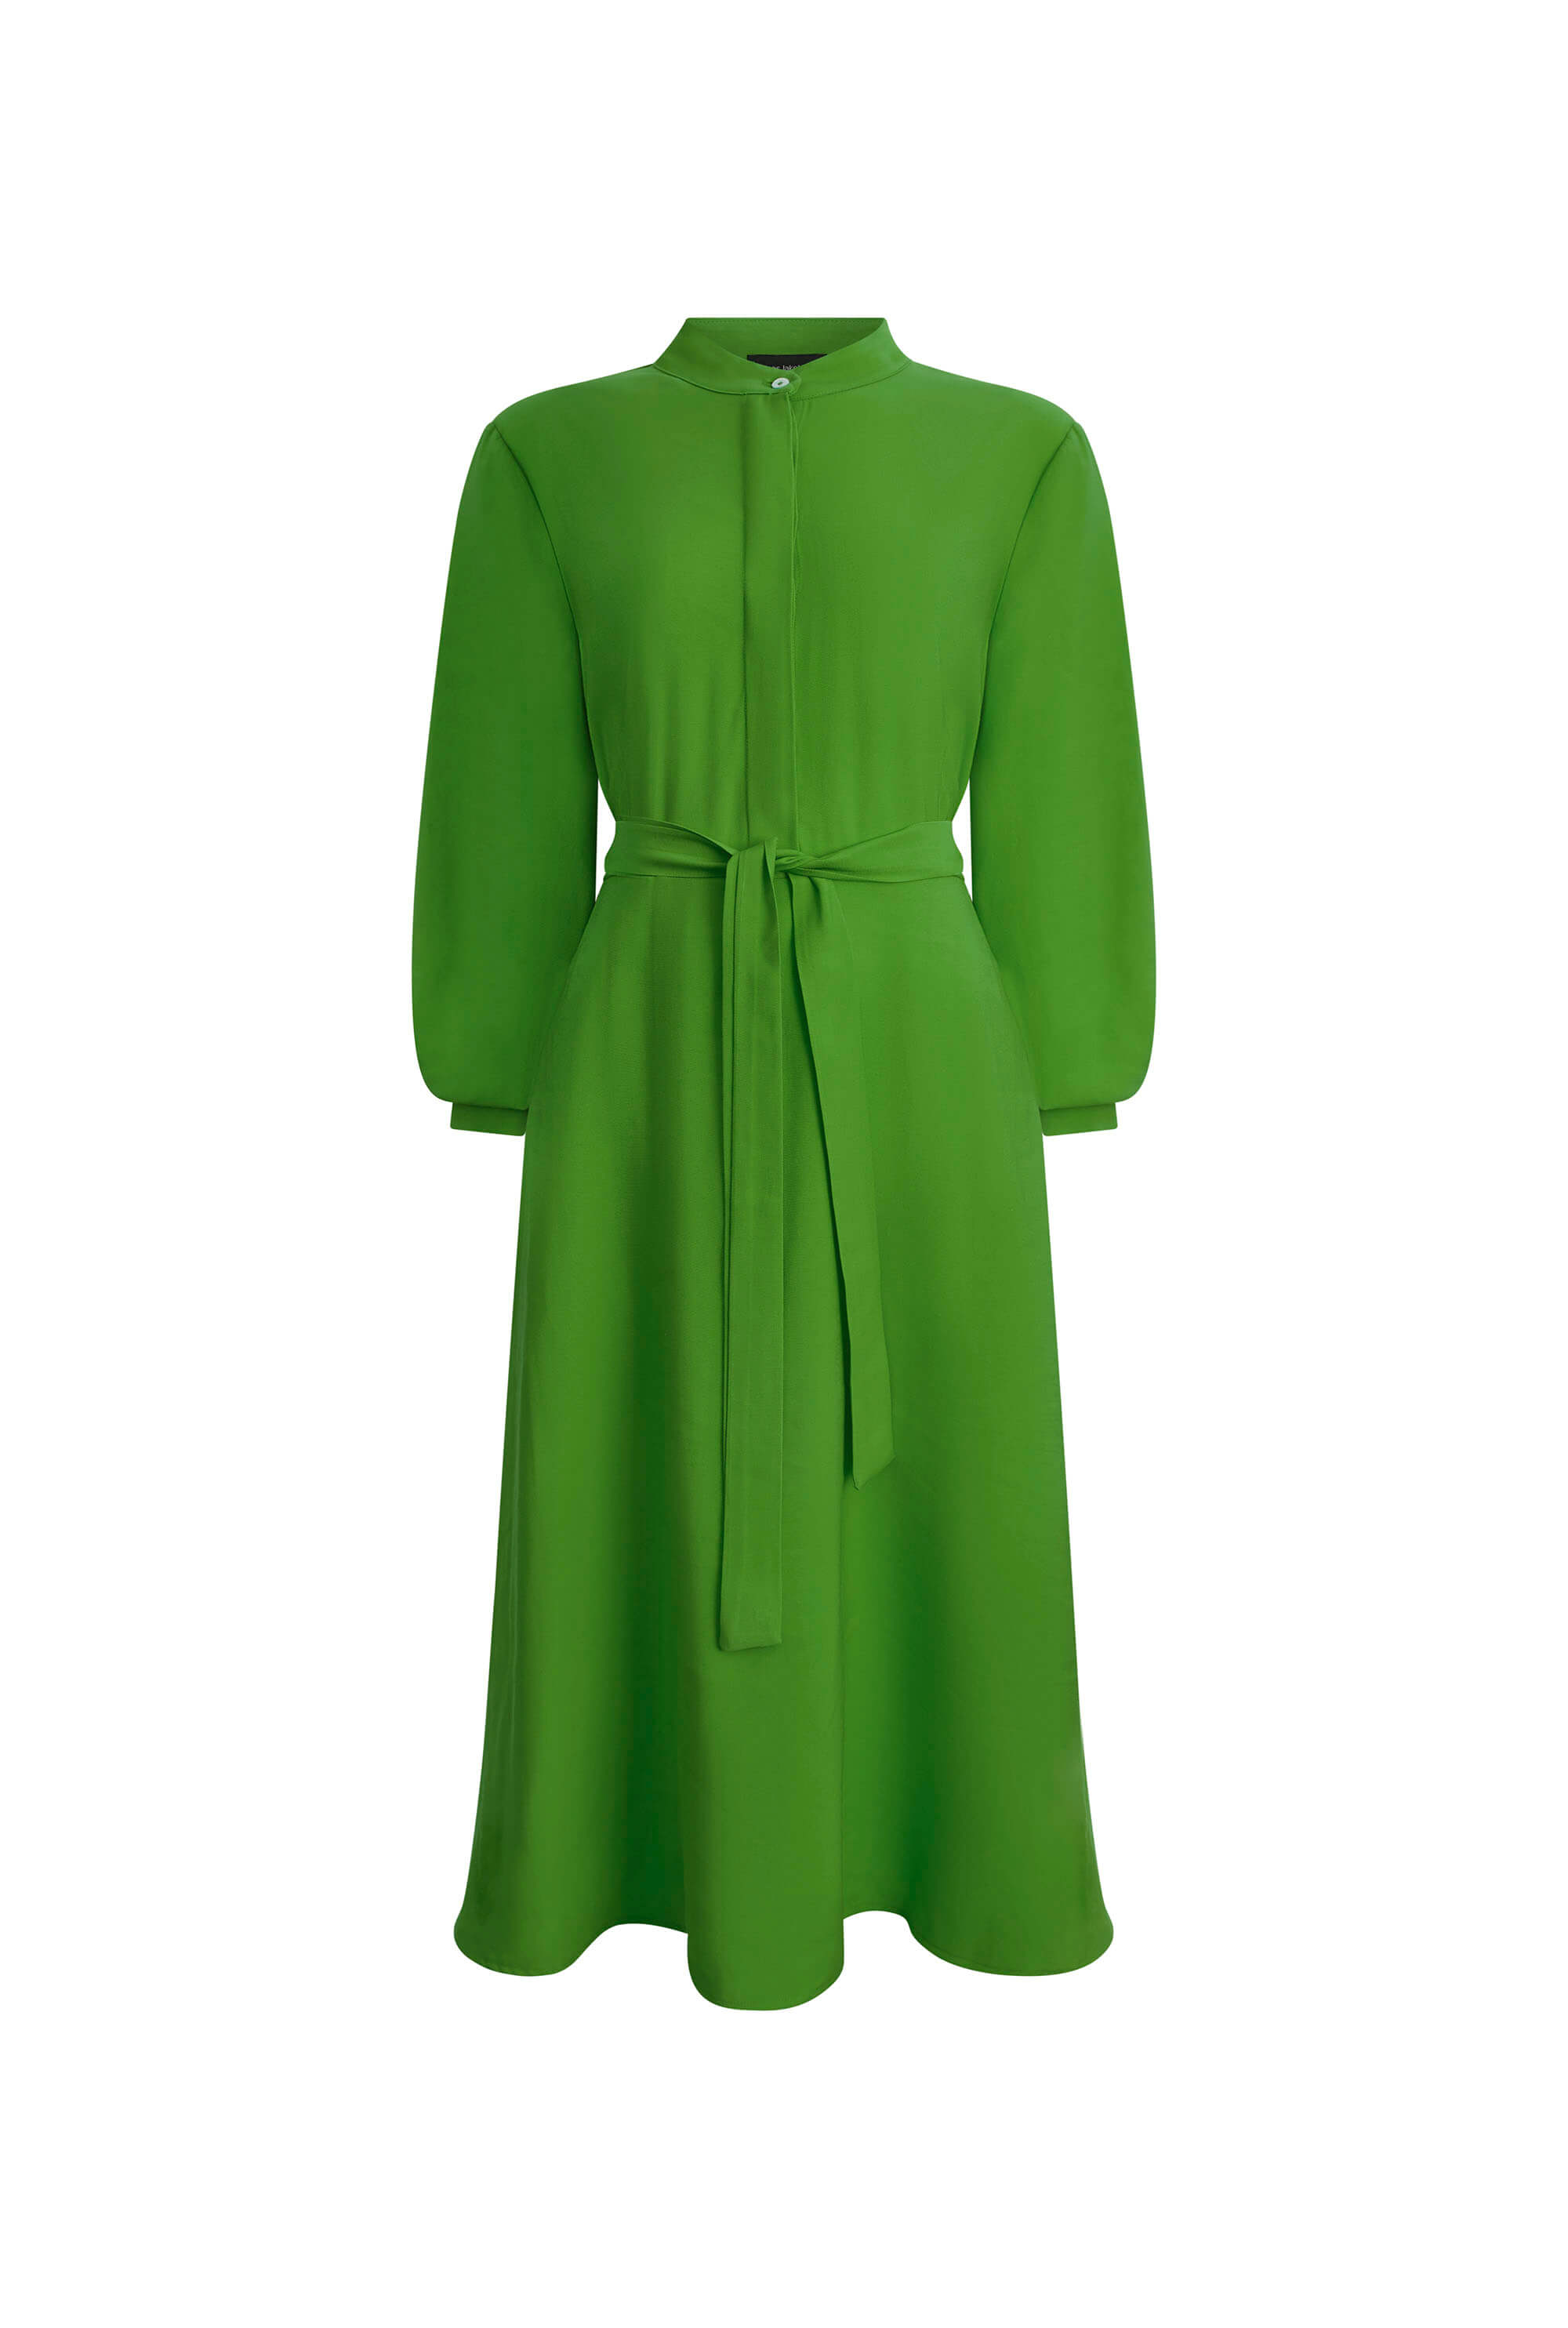 James Lakeland Women's Roll Sleeve Midi Dress Green